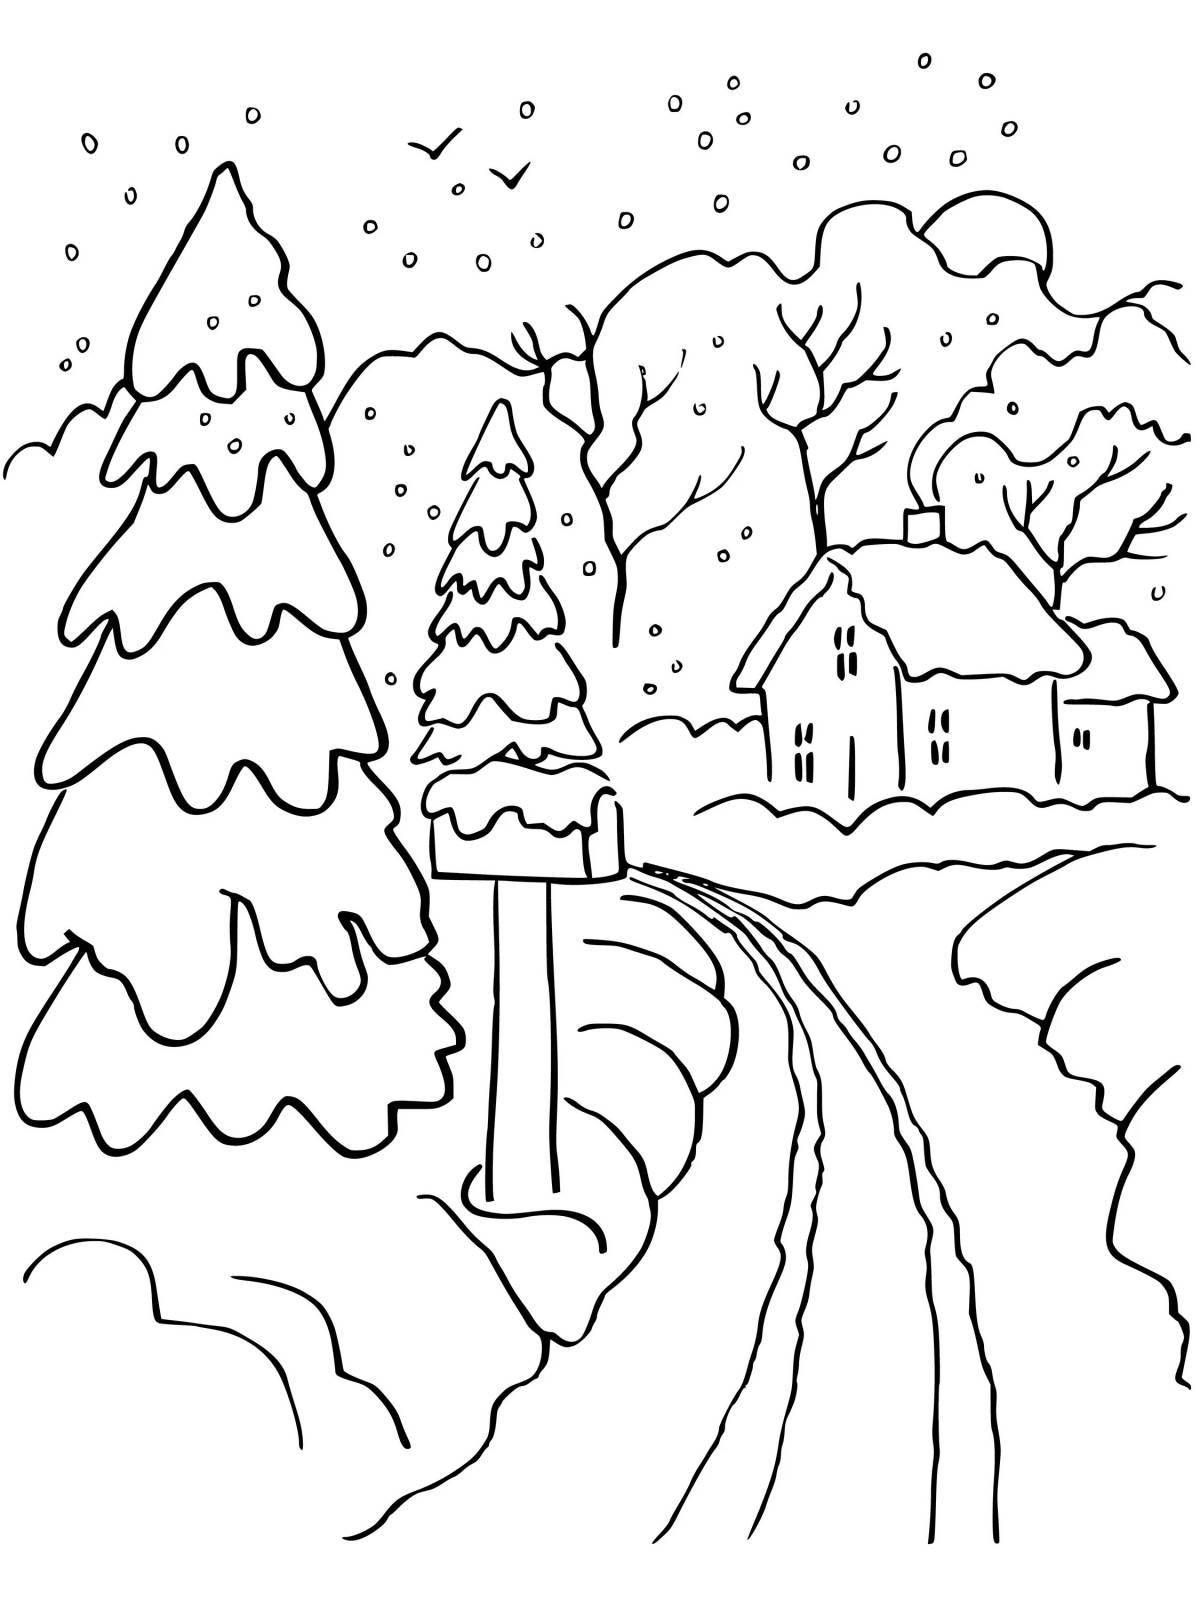 Great snowfall coloring page